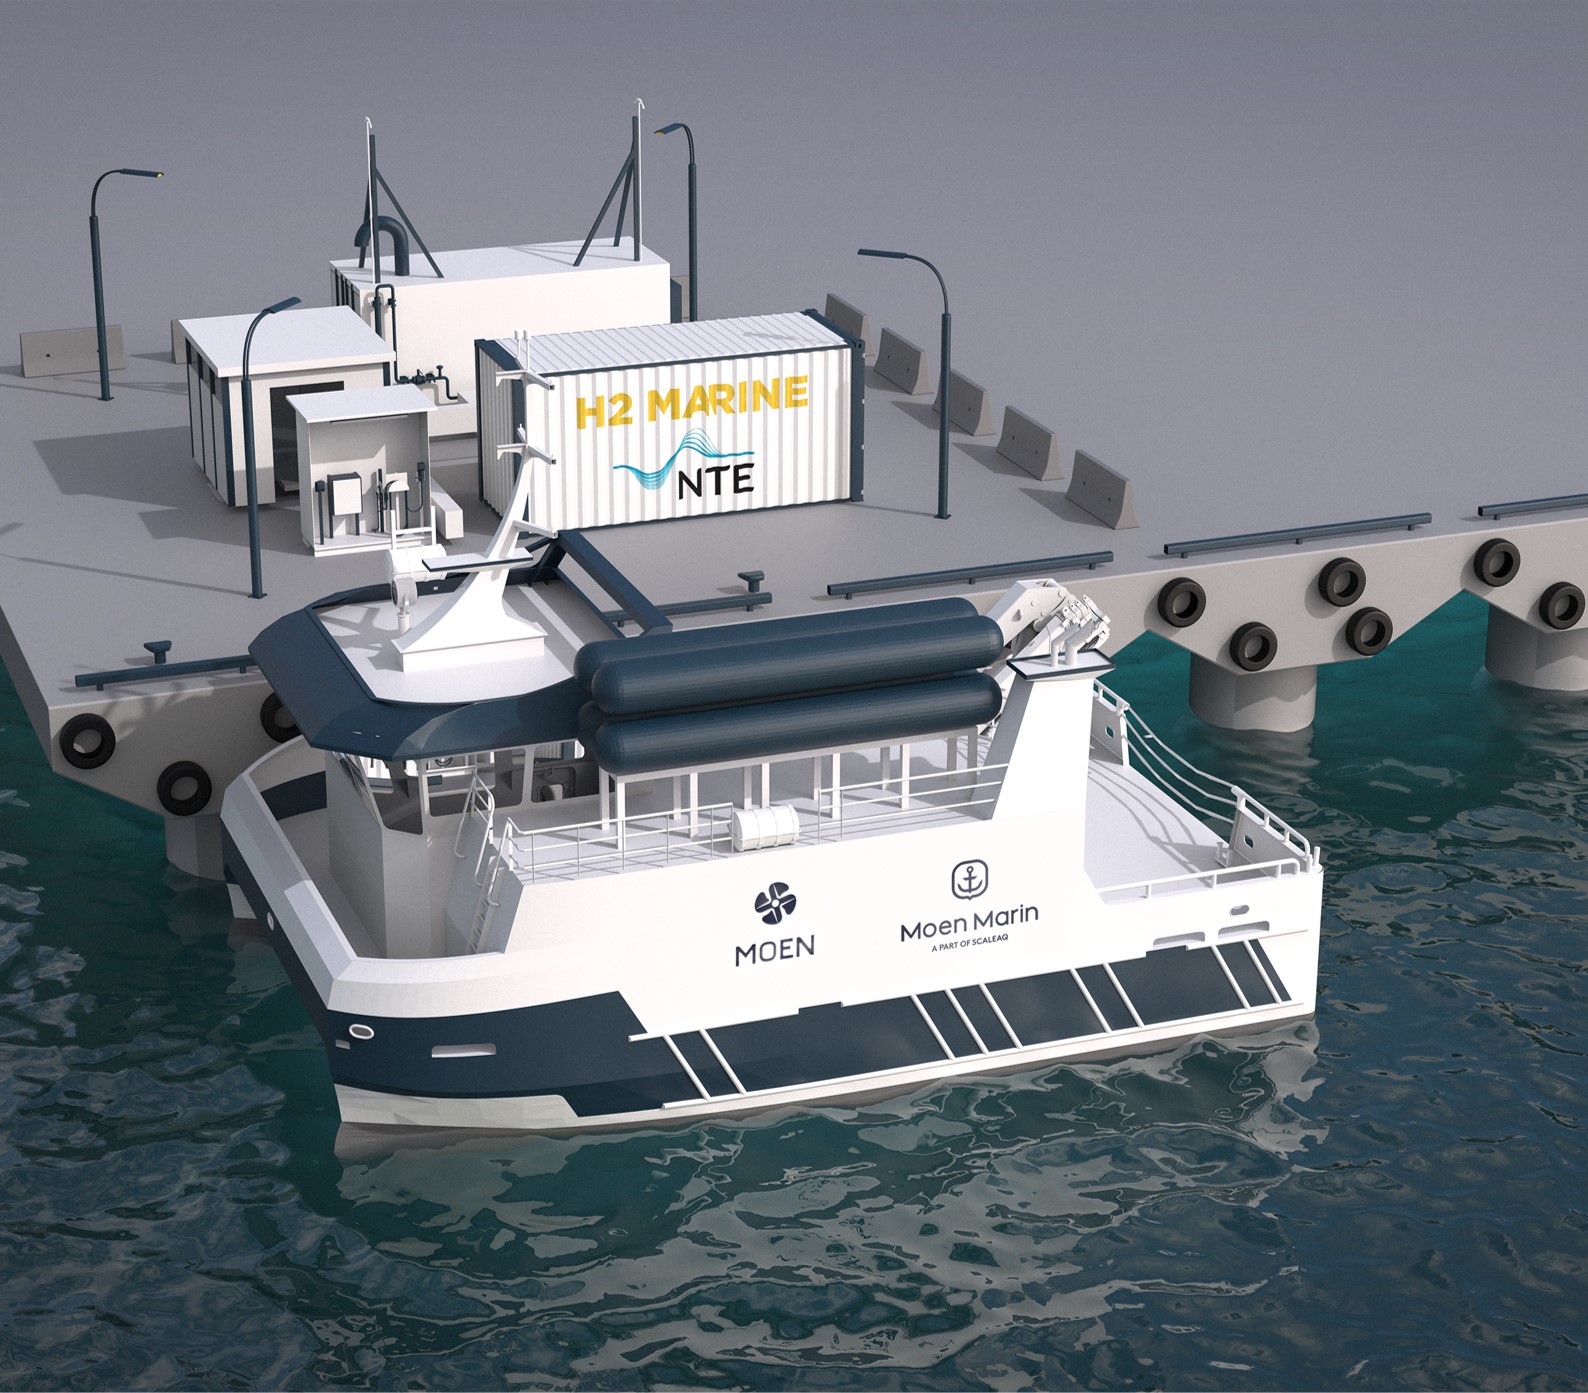  Moen Marin's hydrogen-powered workboat